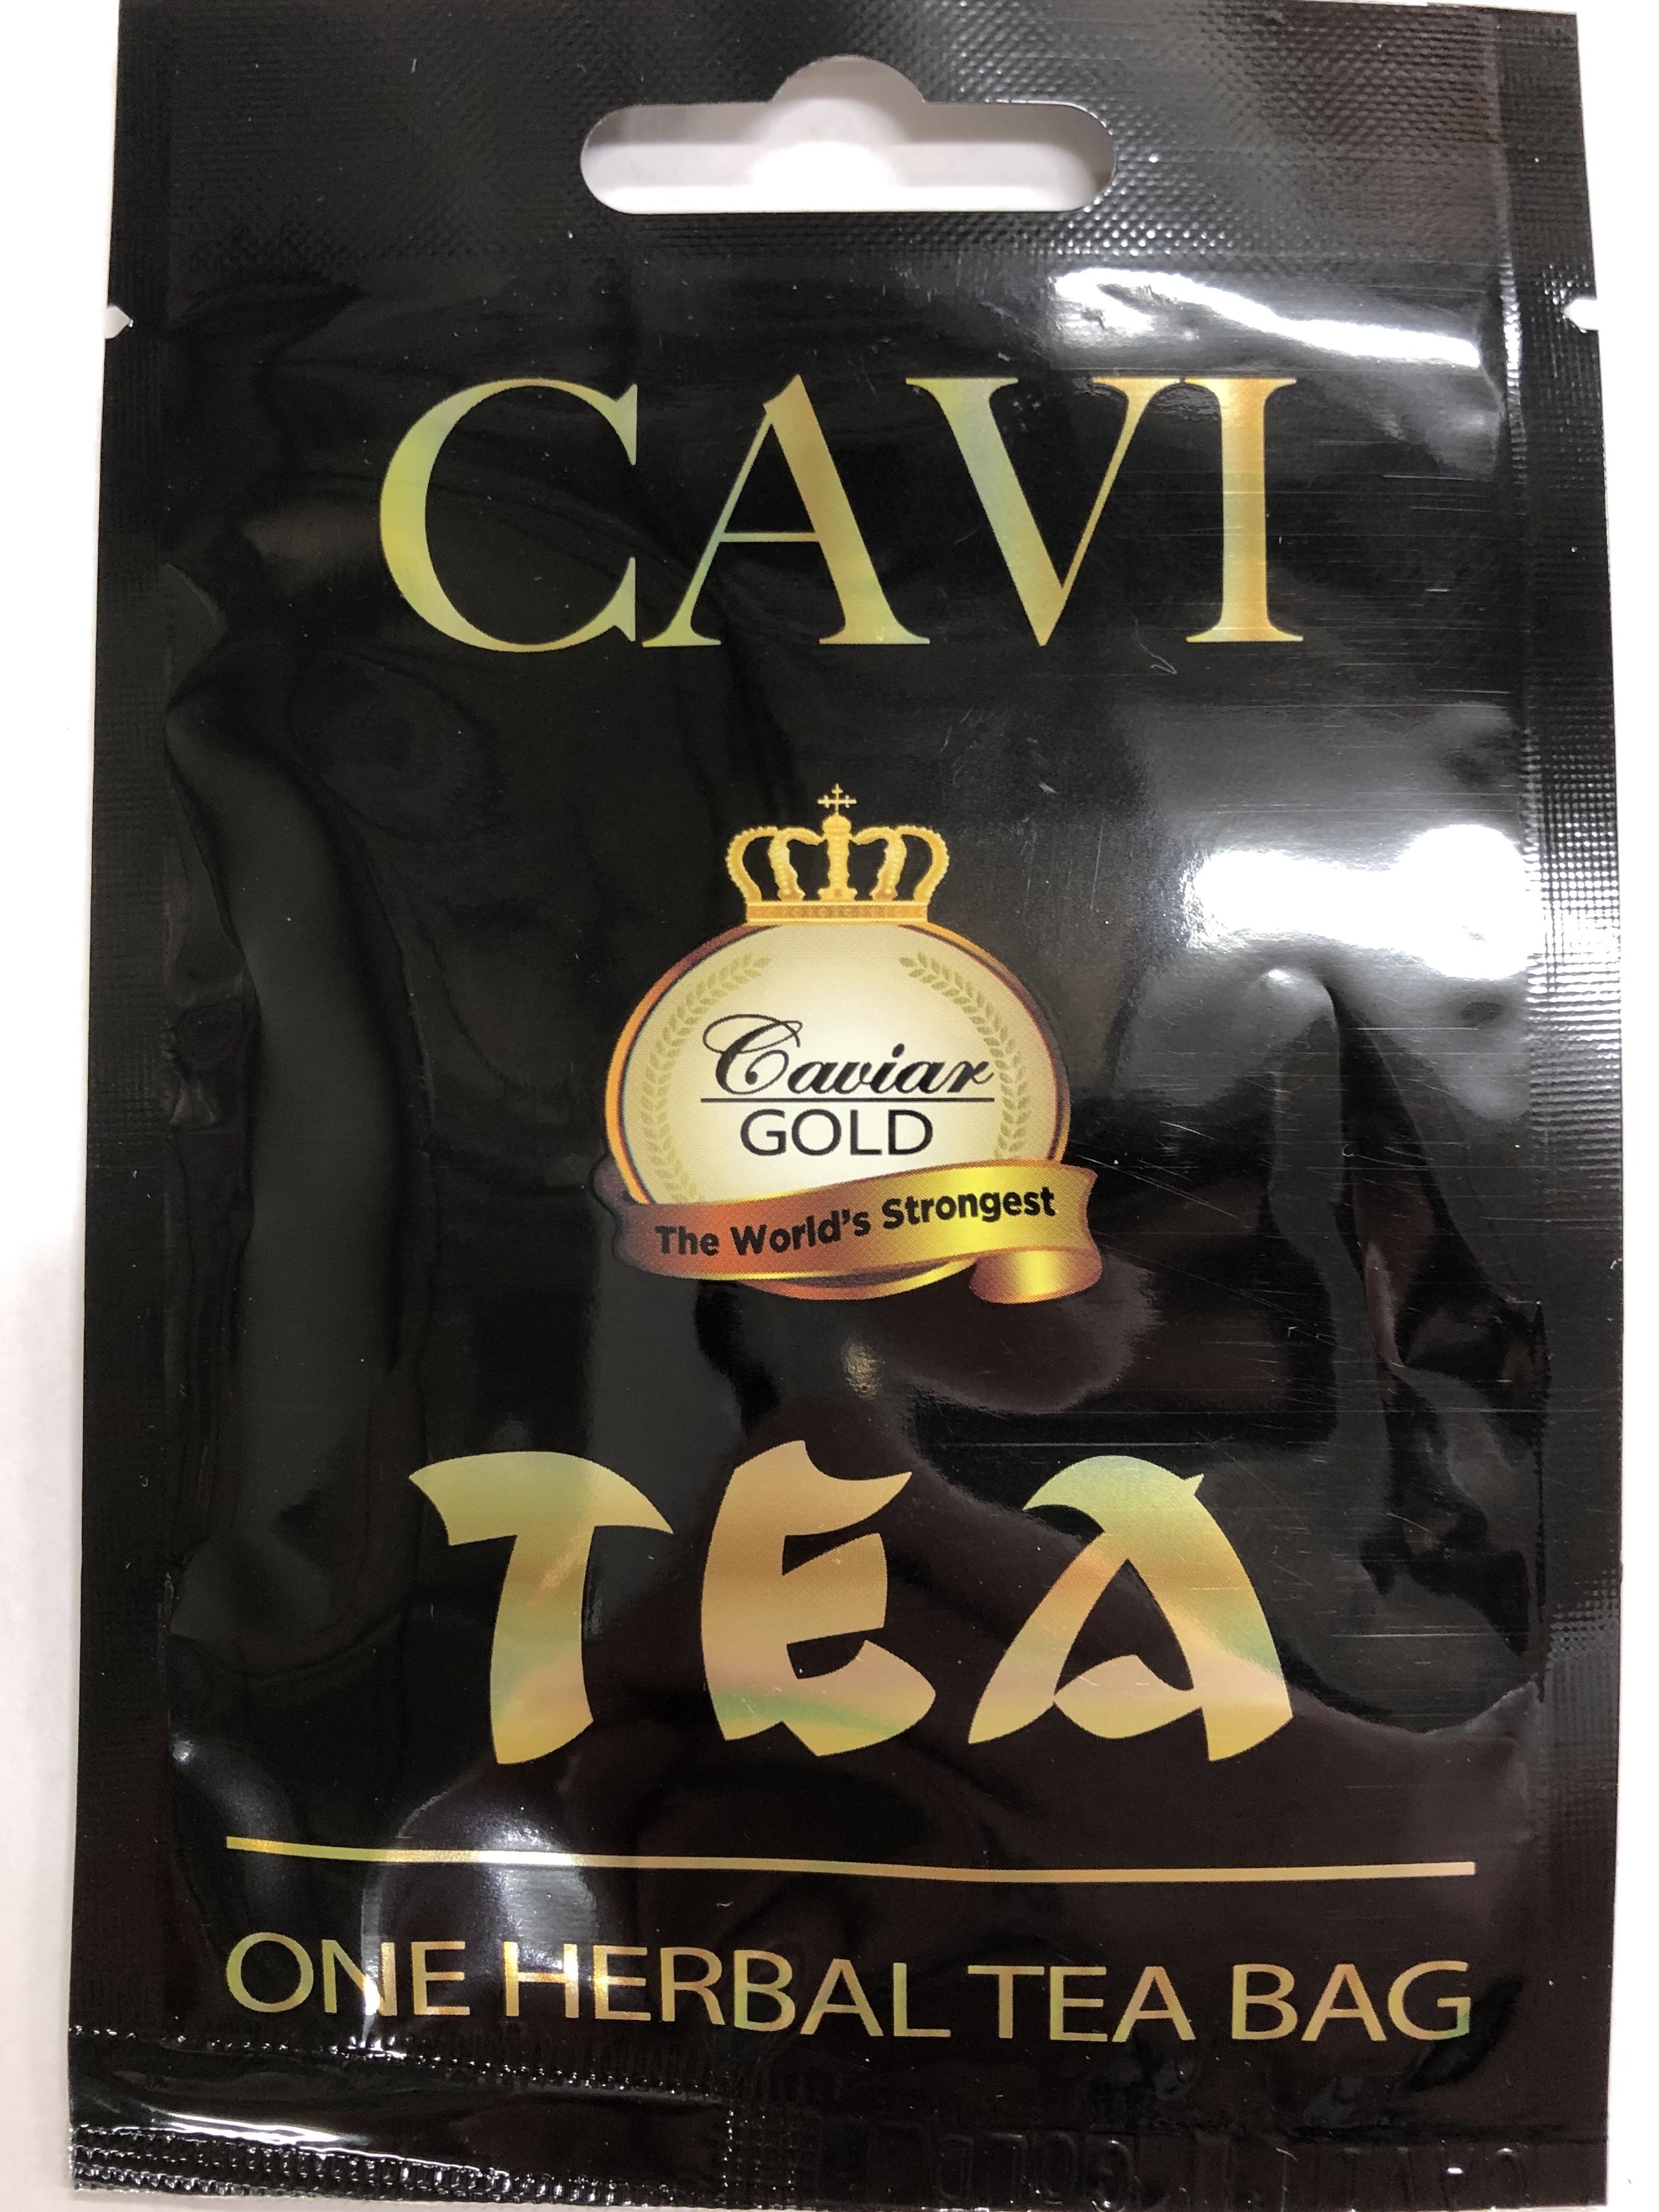 edible-cavi-tea-bag-50mg-cbd